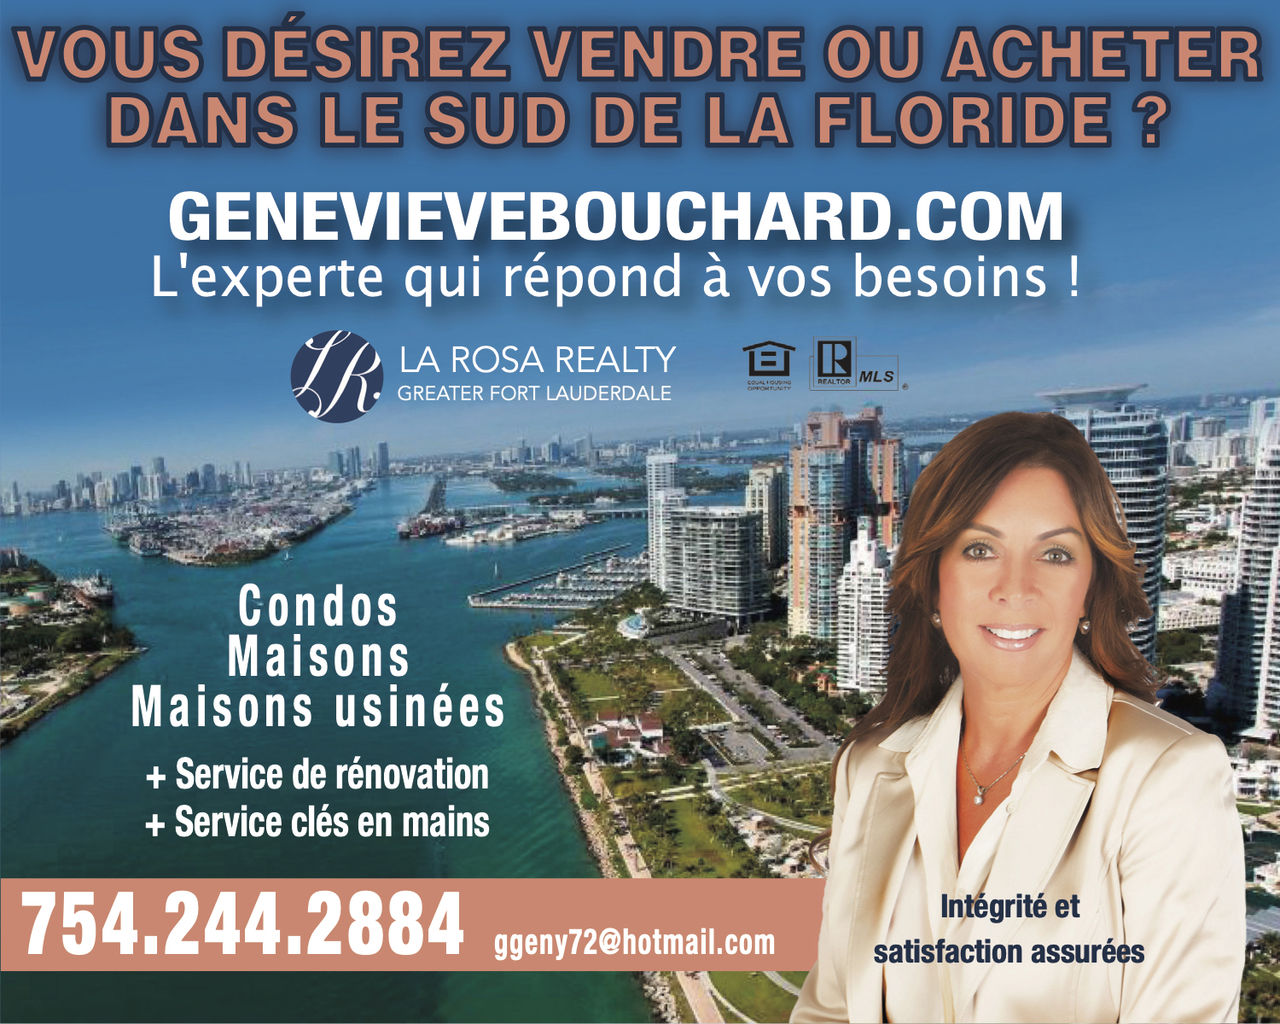 Agent immobilier en Floride, Geneviève Bouchard